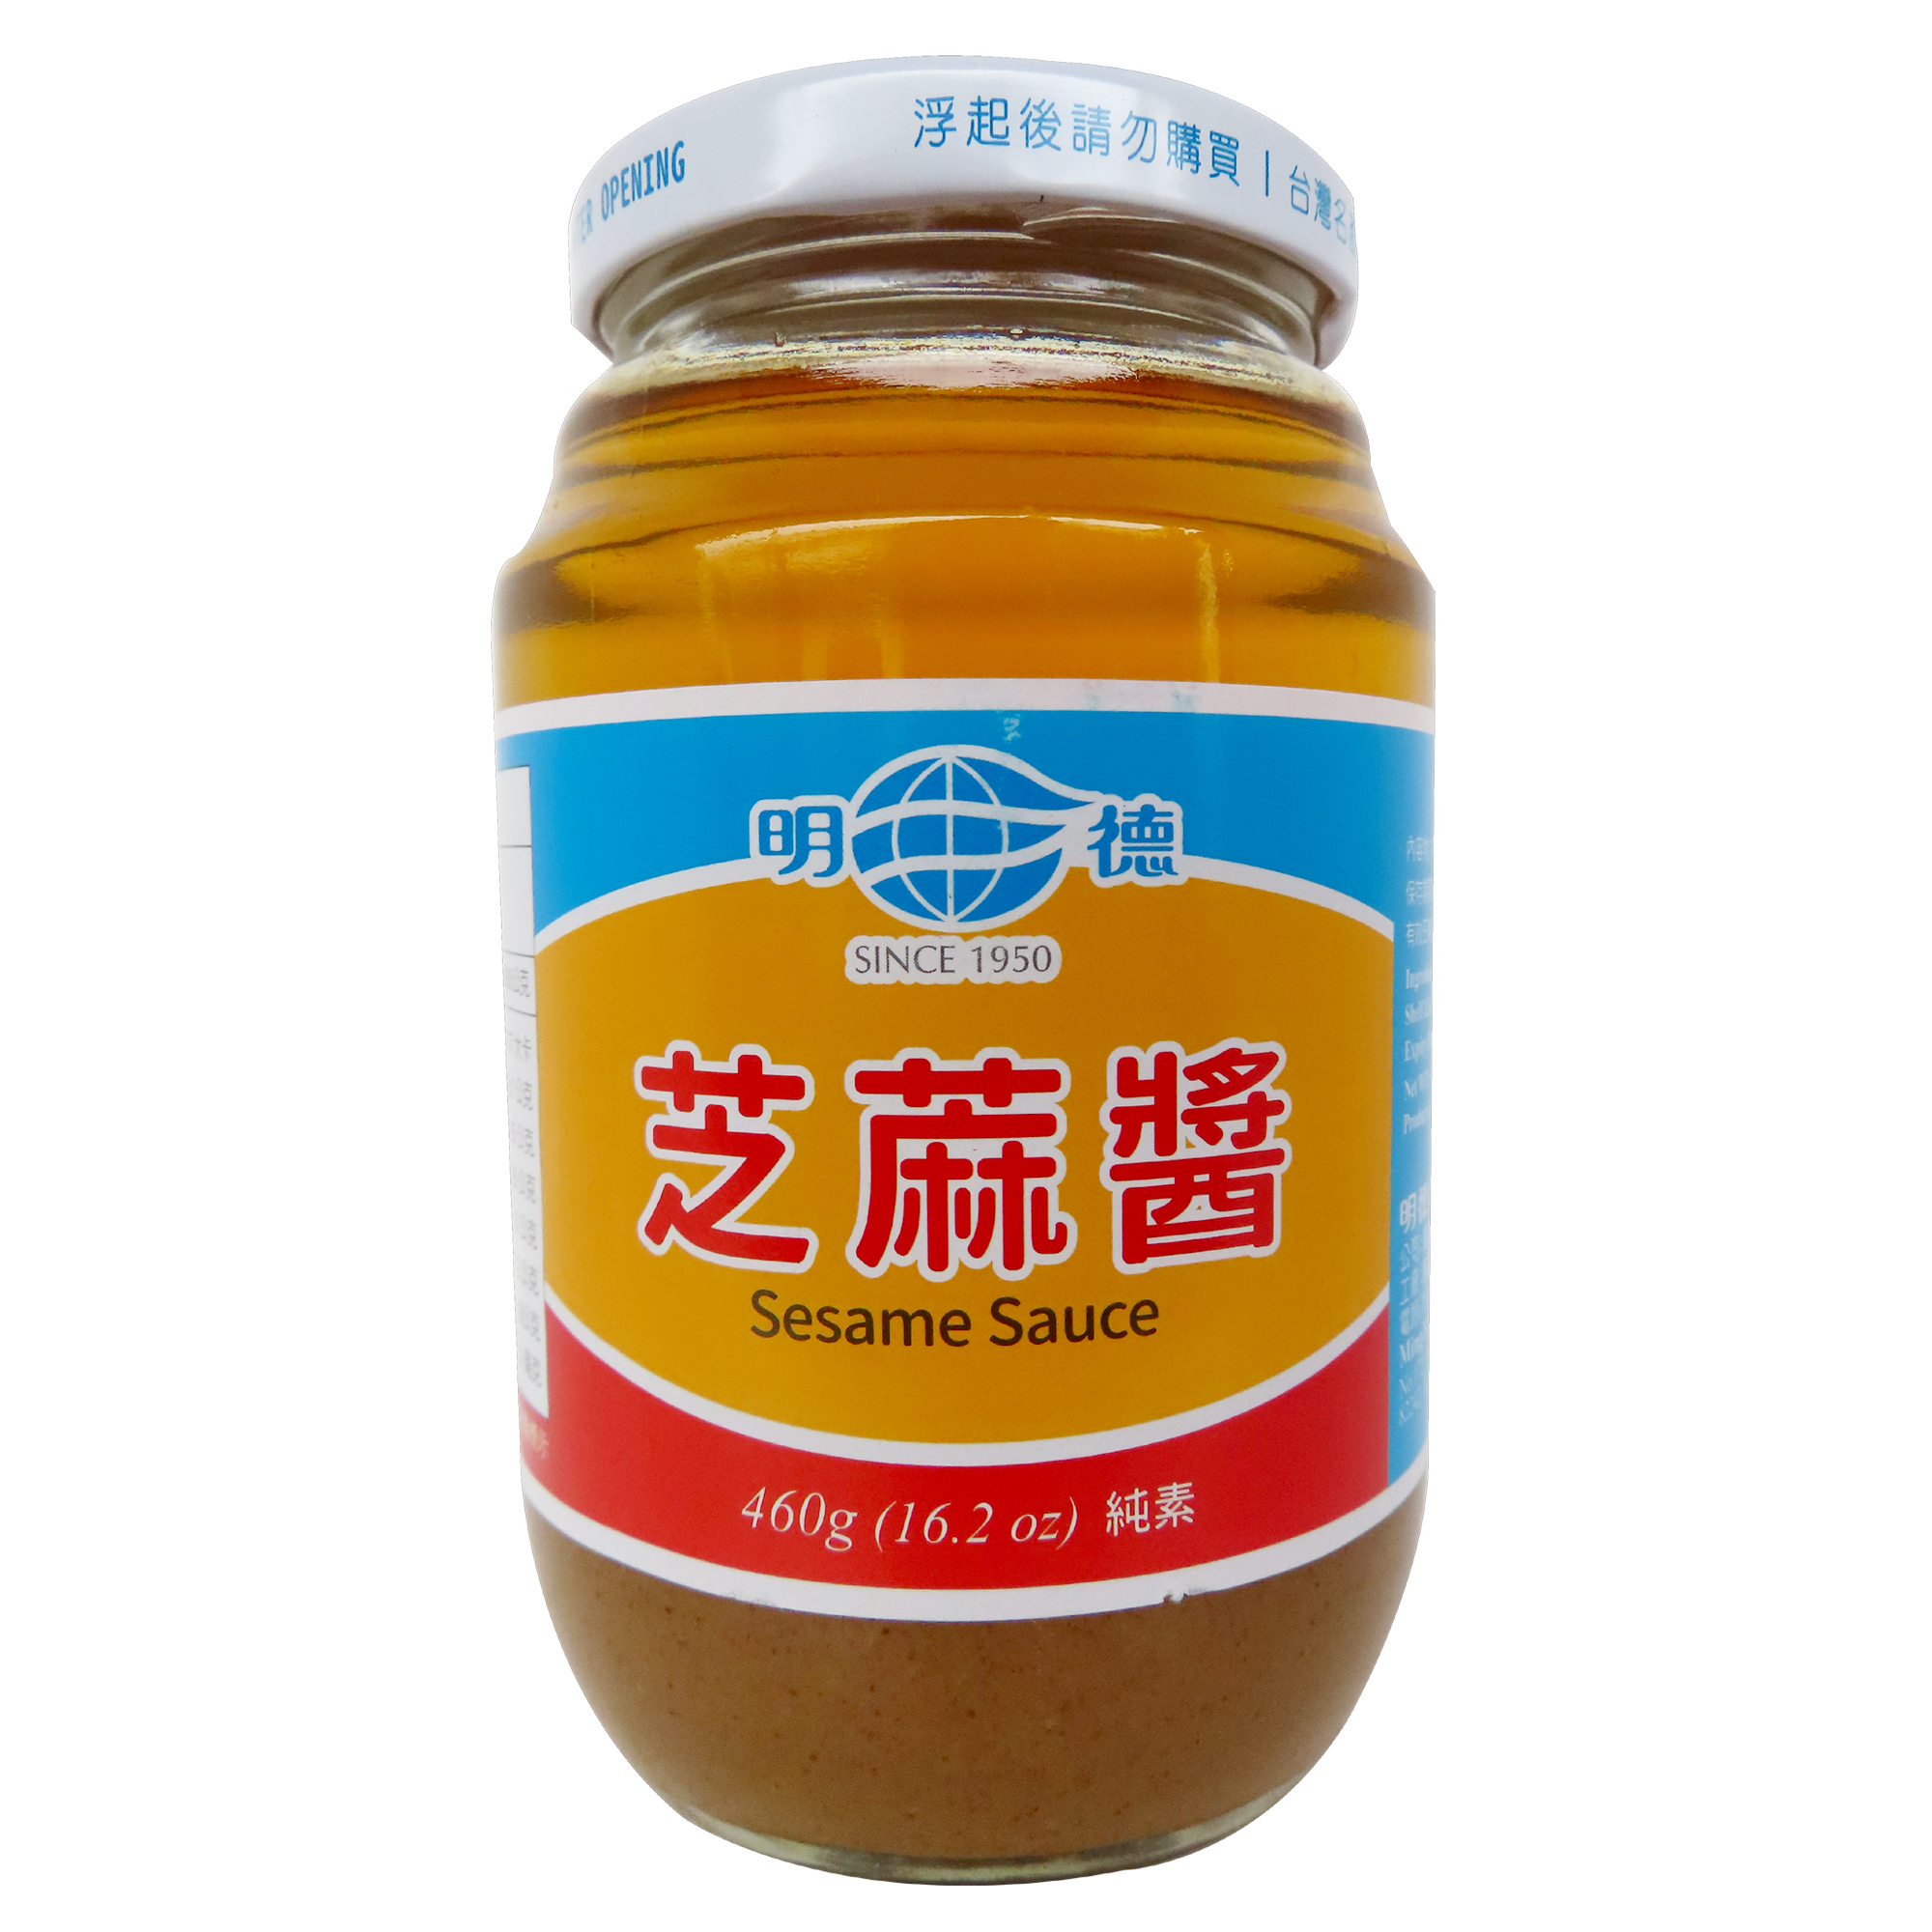 Image Ming De Sesame Sauce 明德-芝麻醬 460 grams